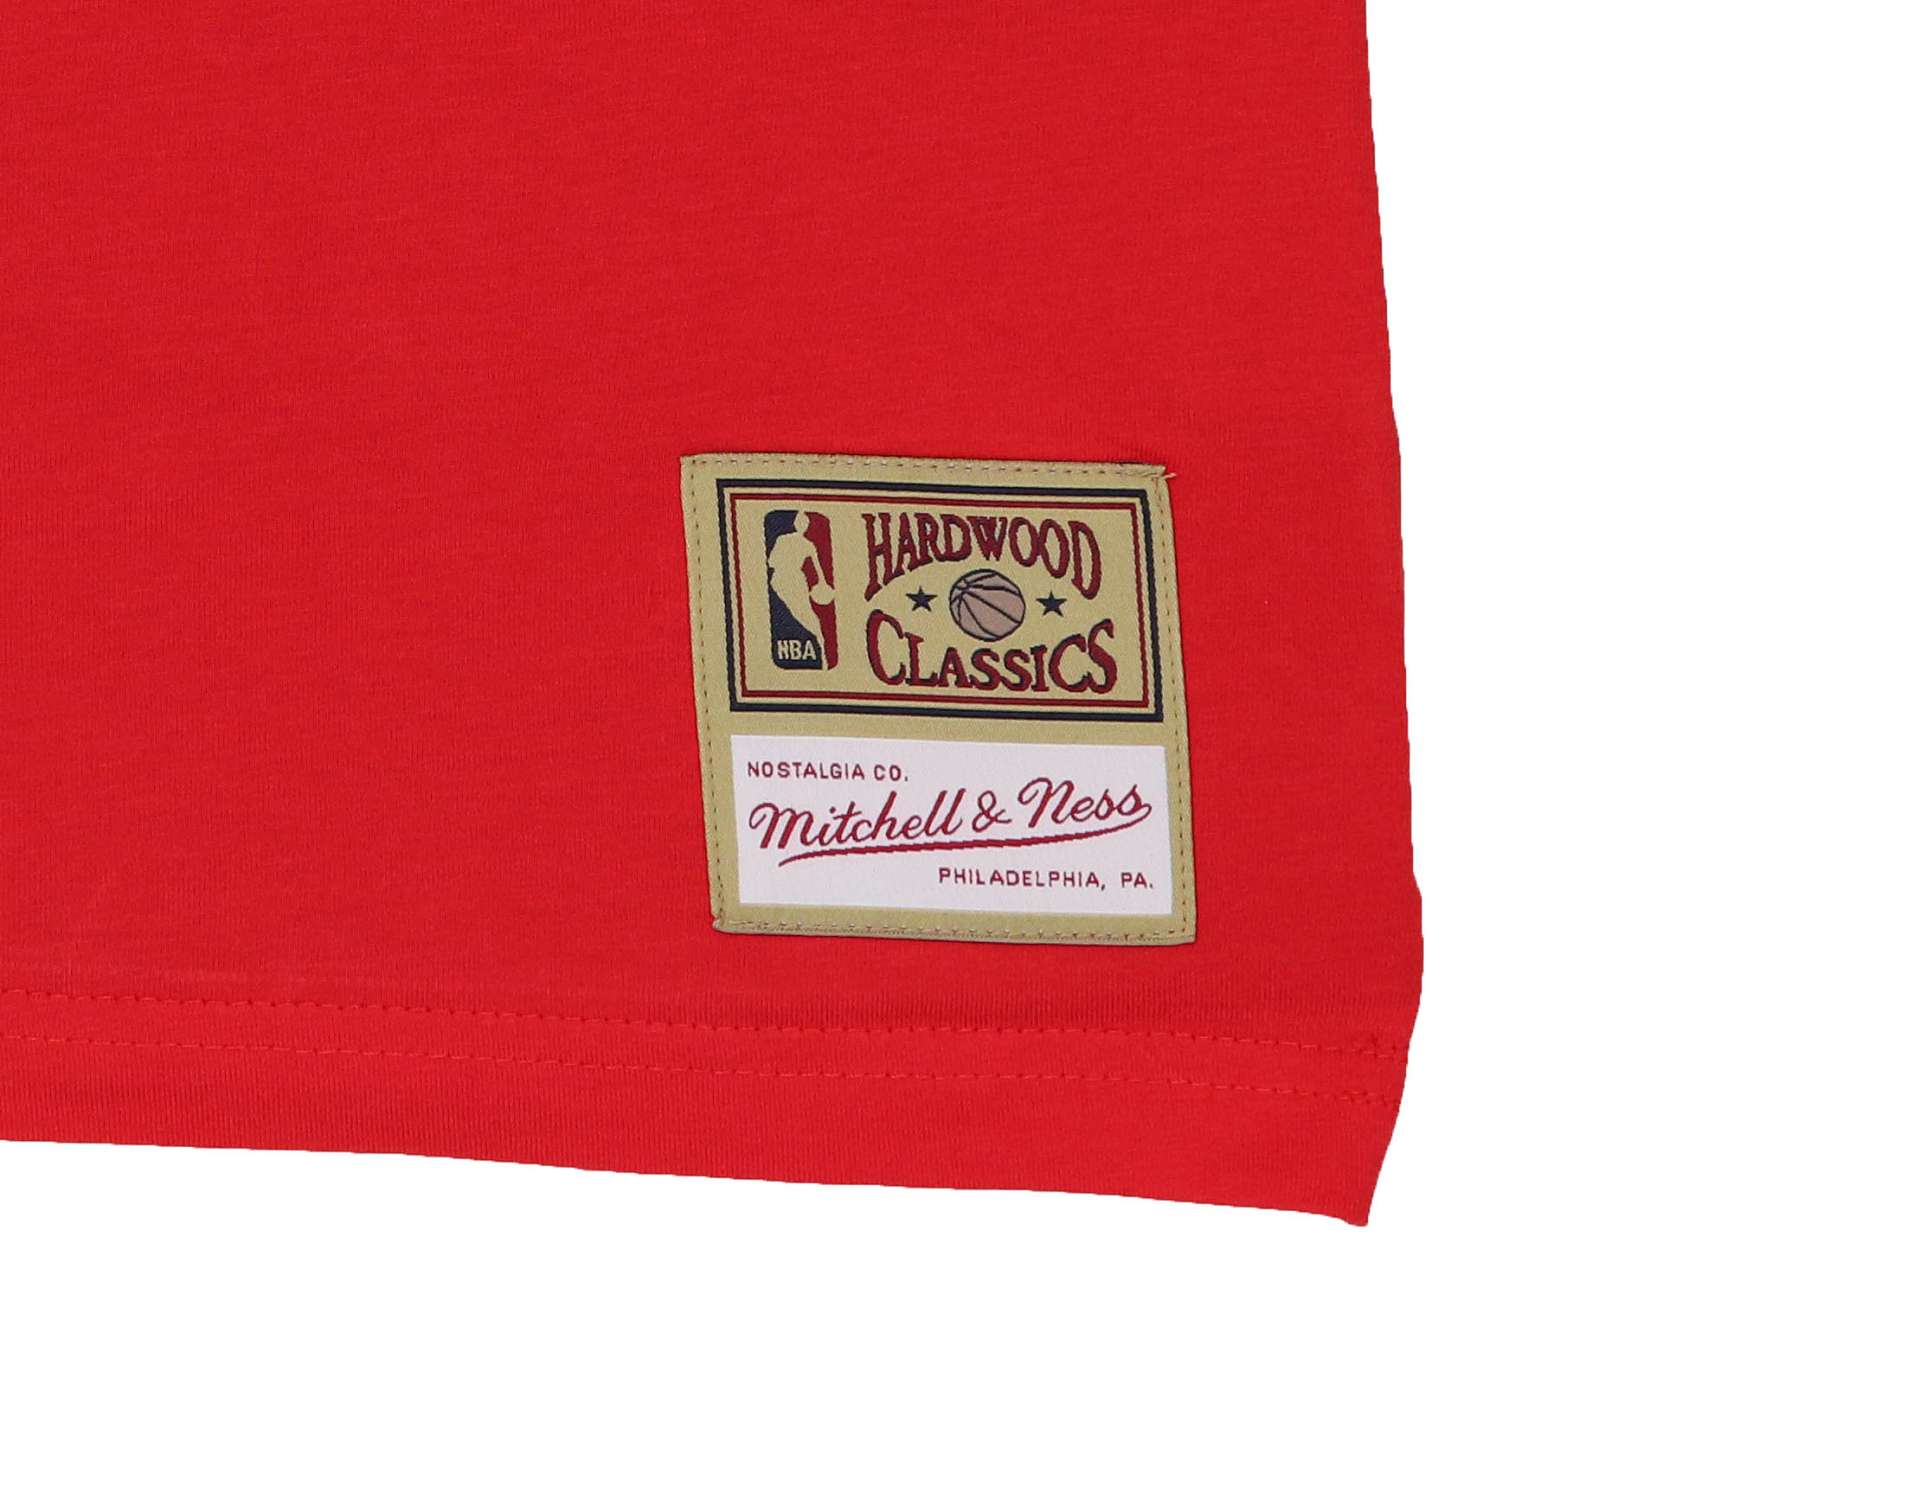 Dennis Rodman #91 Chicago Bulls NBA Name & Number Tee Red T-Shirt Mitchell & Ness